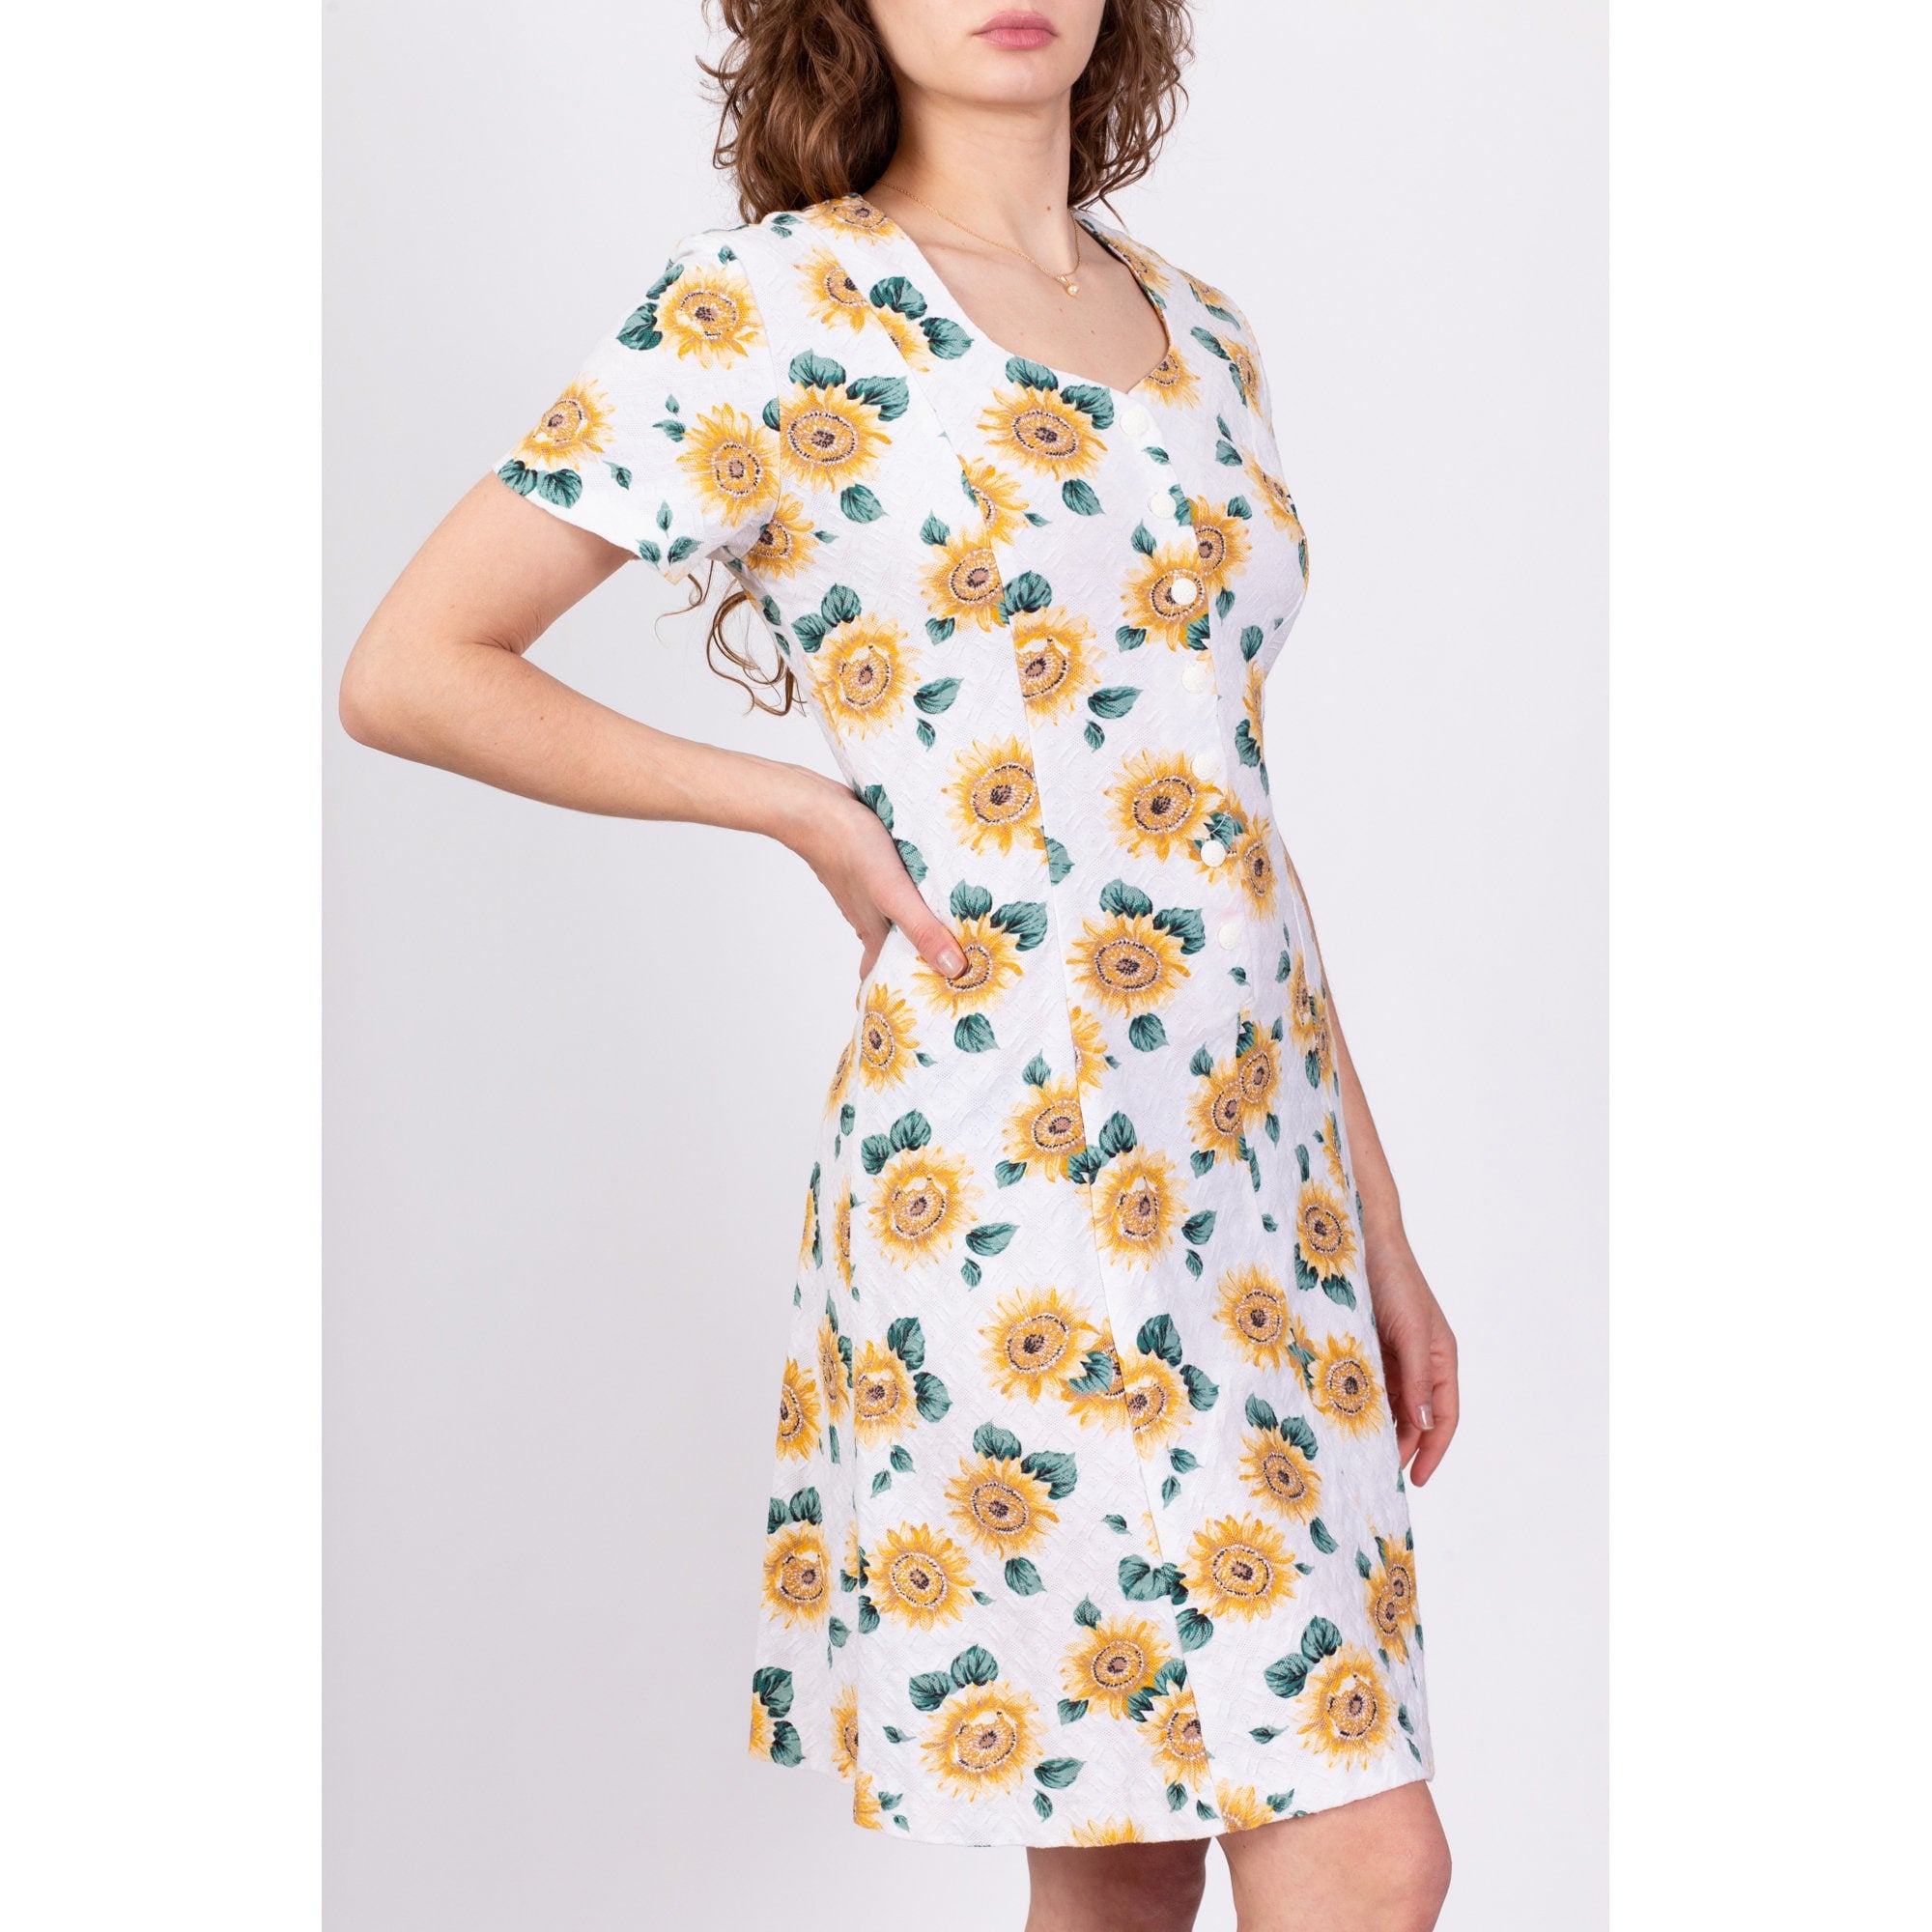 Buy Lavany Girls Dress Lavany Little Girls Tank Dress, Cute Sleeveless Sunflower  Print Dresses For 1-6 Year at Amazon.in